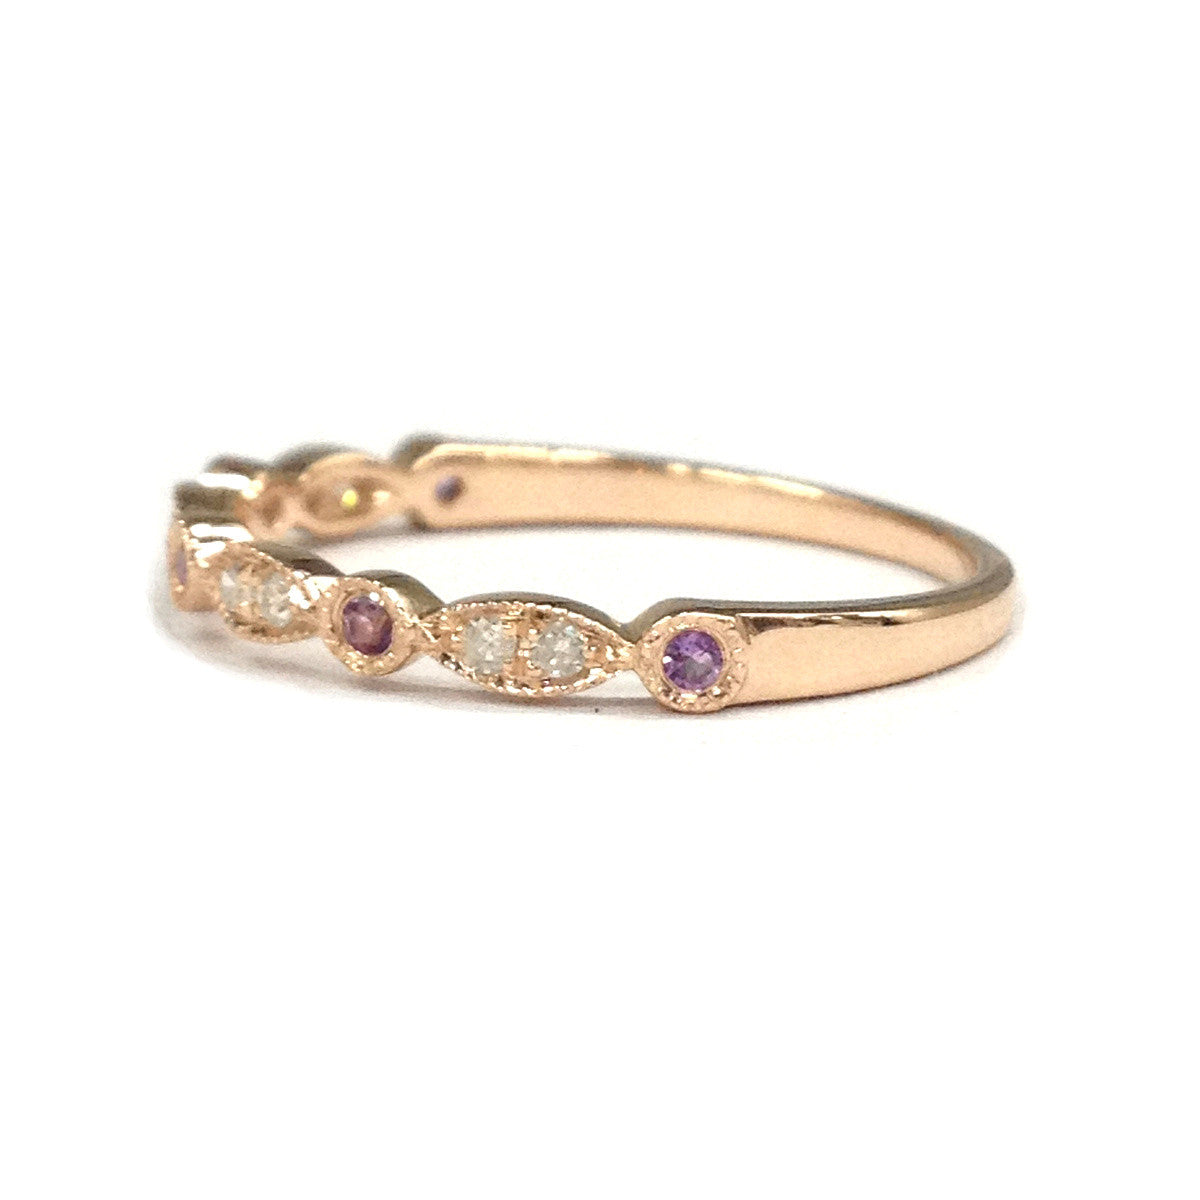 Amethyst/Diamond Wedding Band Half Eternity Anniversary Ring 14K Rose Gold, Art Deco Antique - Lord of Gem Rings - 2